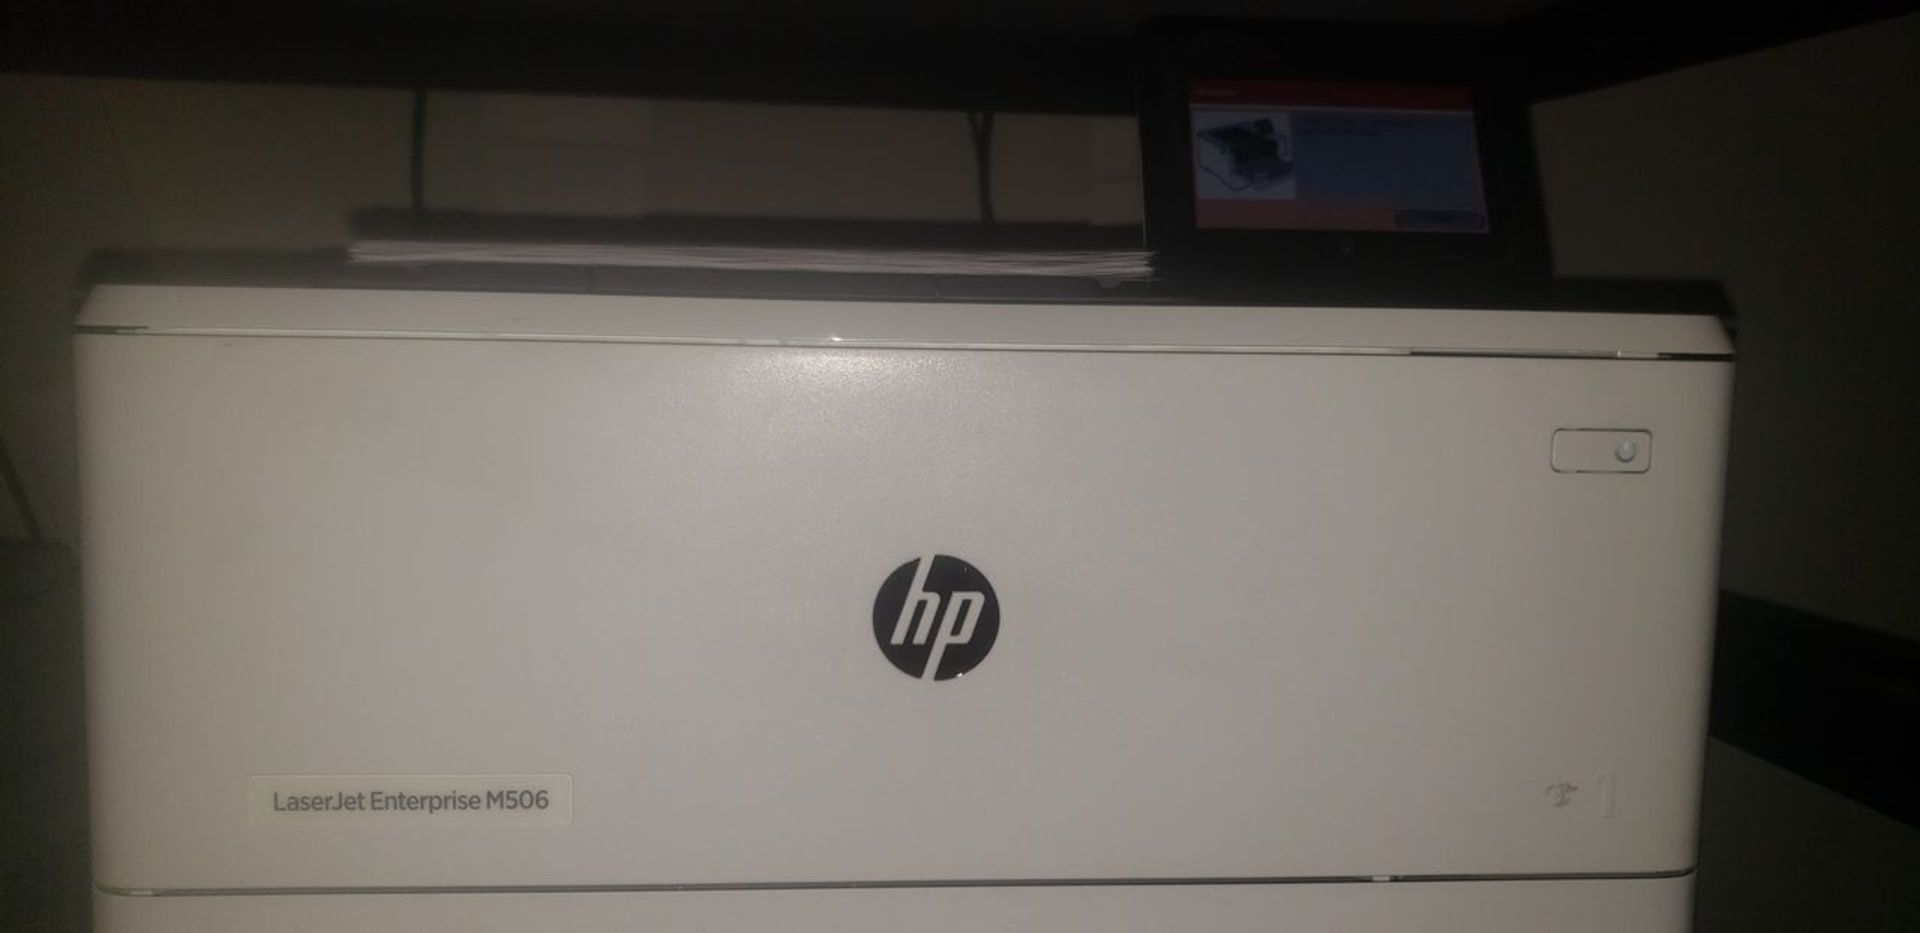 Lot - (2) Hewlett Packard Printers; (1) HP LaserJet P4014N, and (1) Laserjet Enterprise M506 - ( - Image 3 of 3